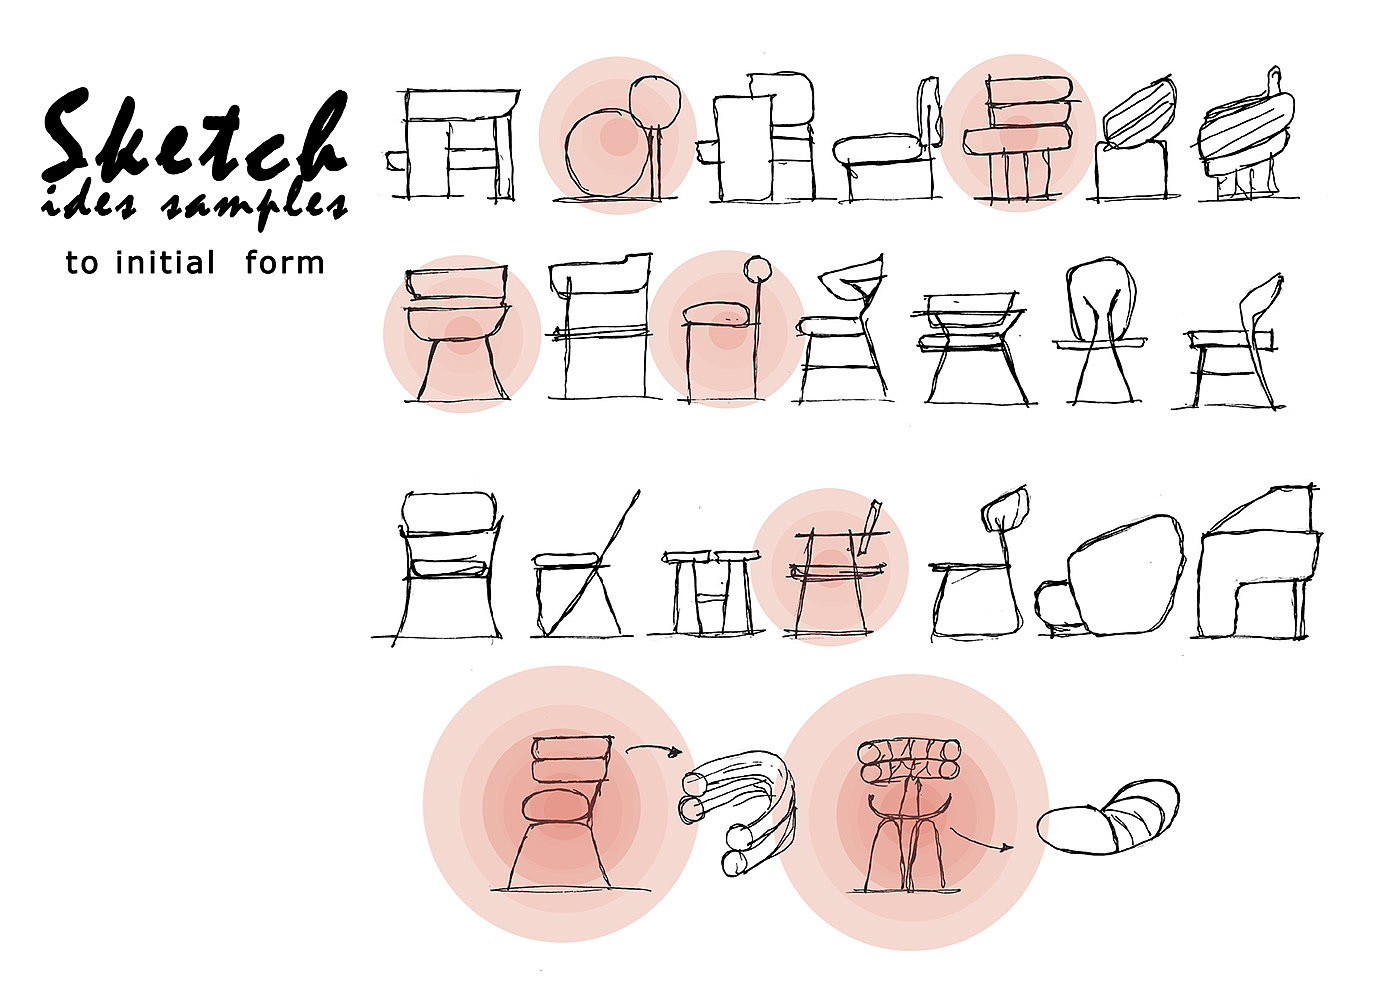 Nexus 椅子，家居设计，美学设计，